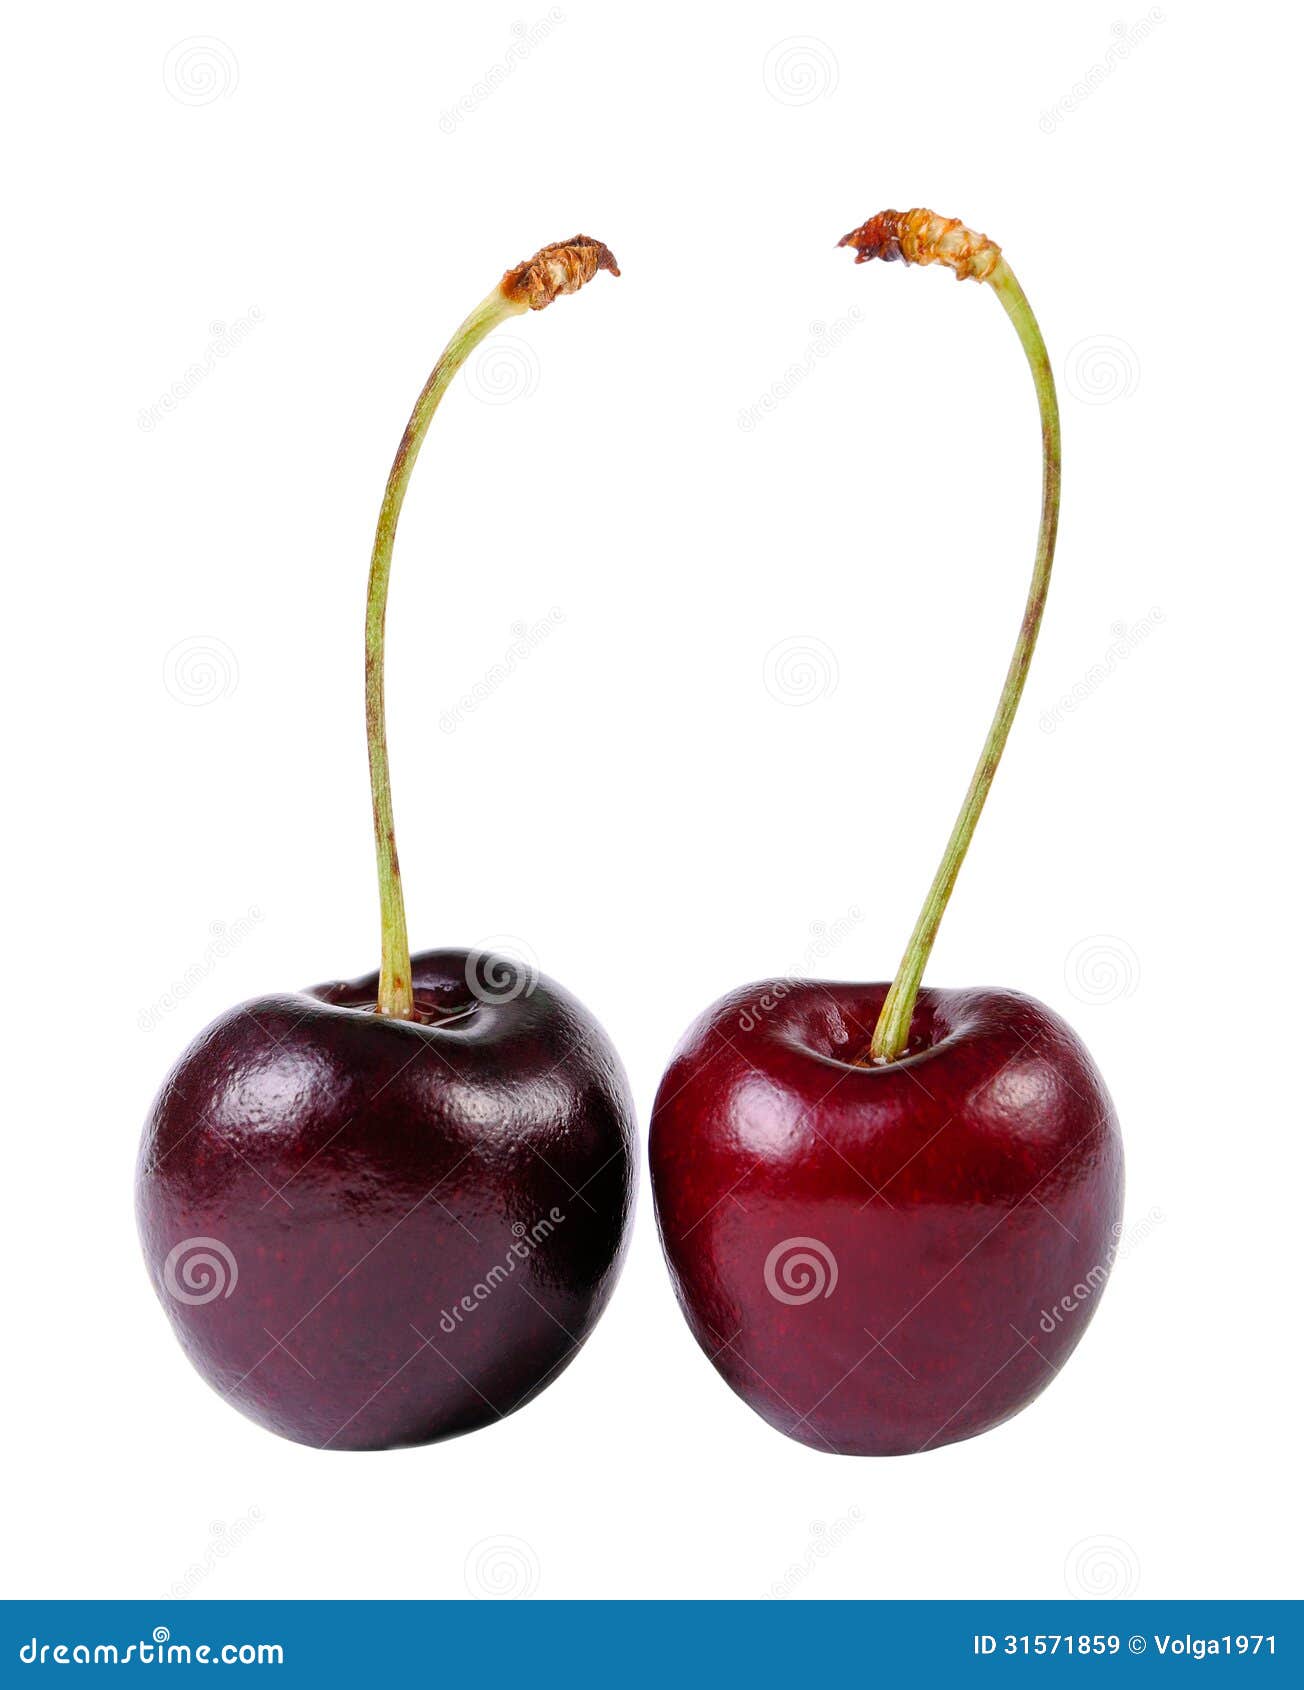 Sweet cherries stock image. Image of growth, gourmet - 31571859